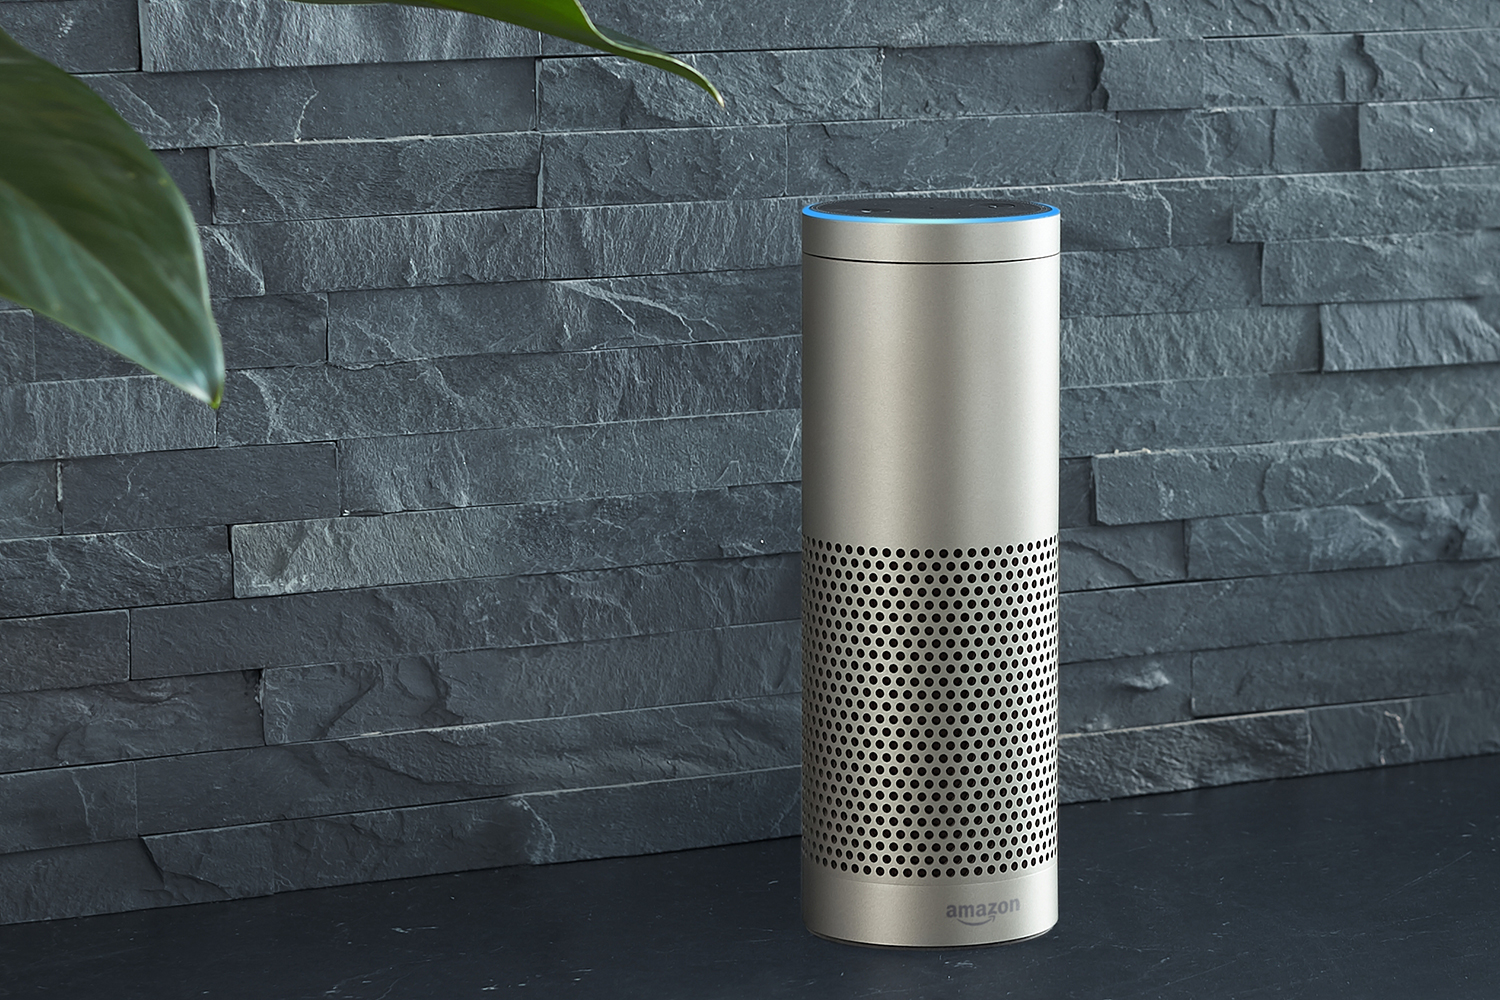 Amazon Echo Plus Amazon Alexa